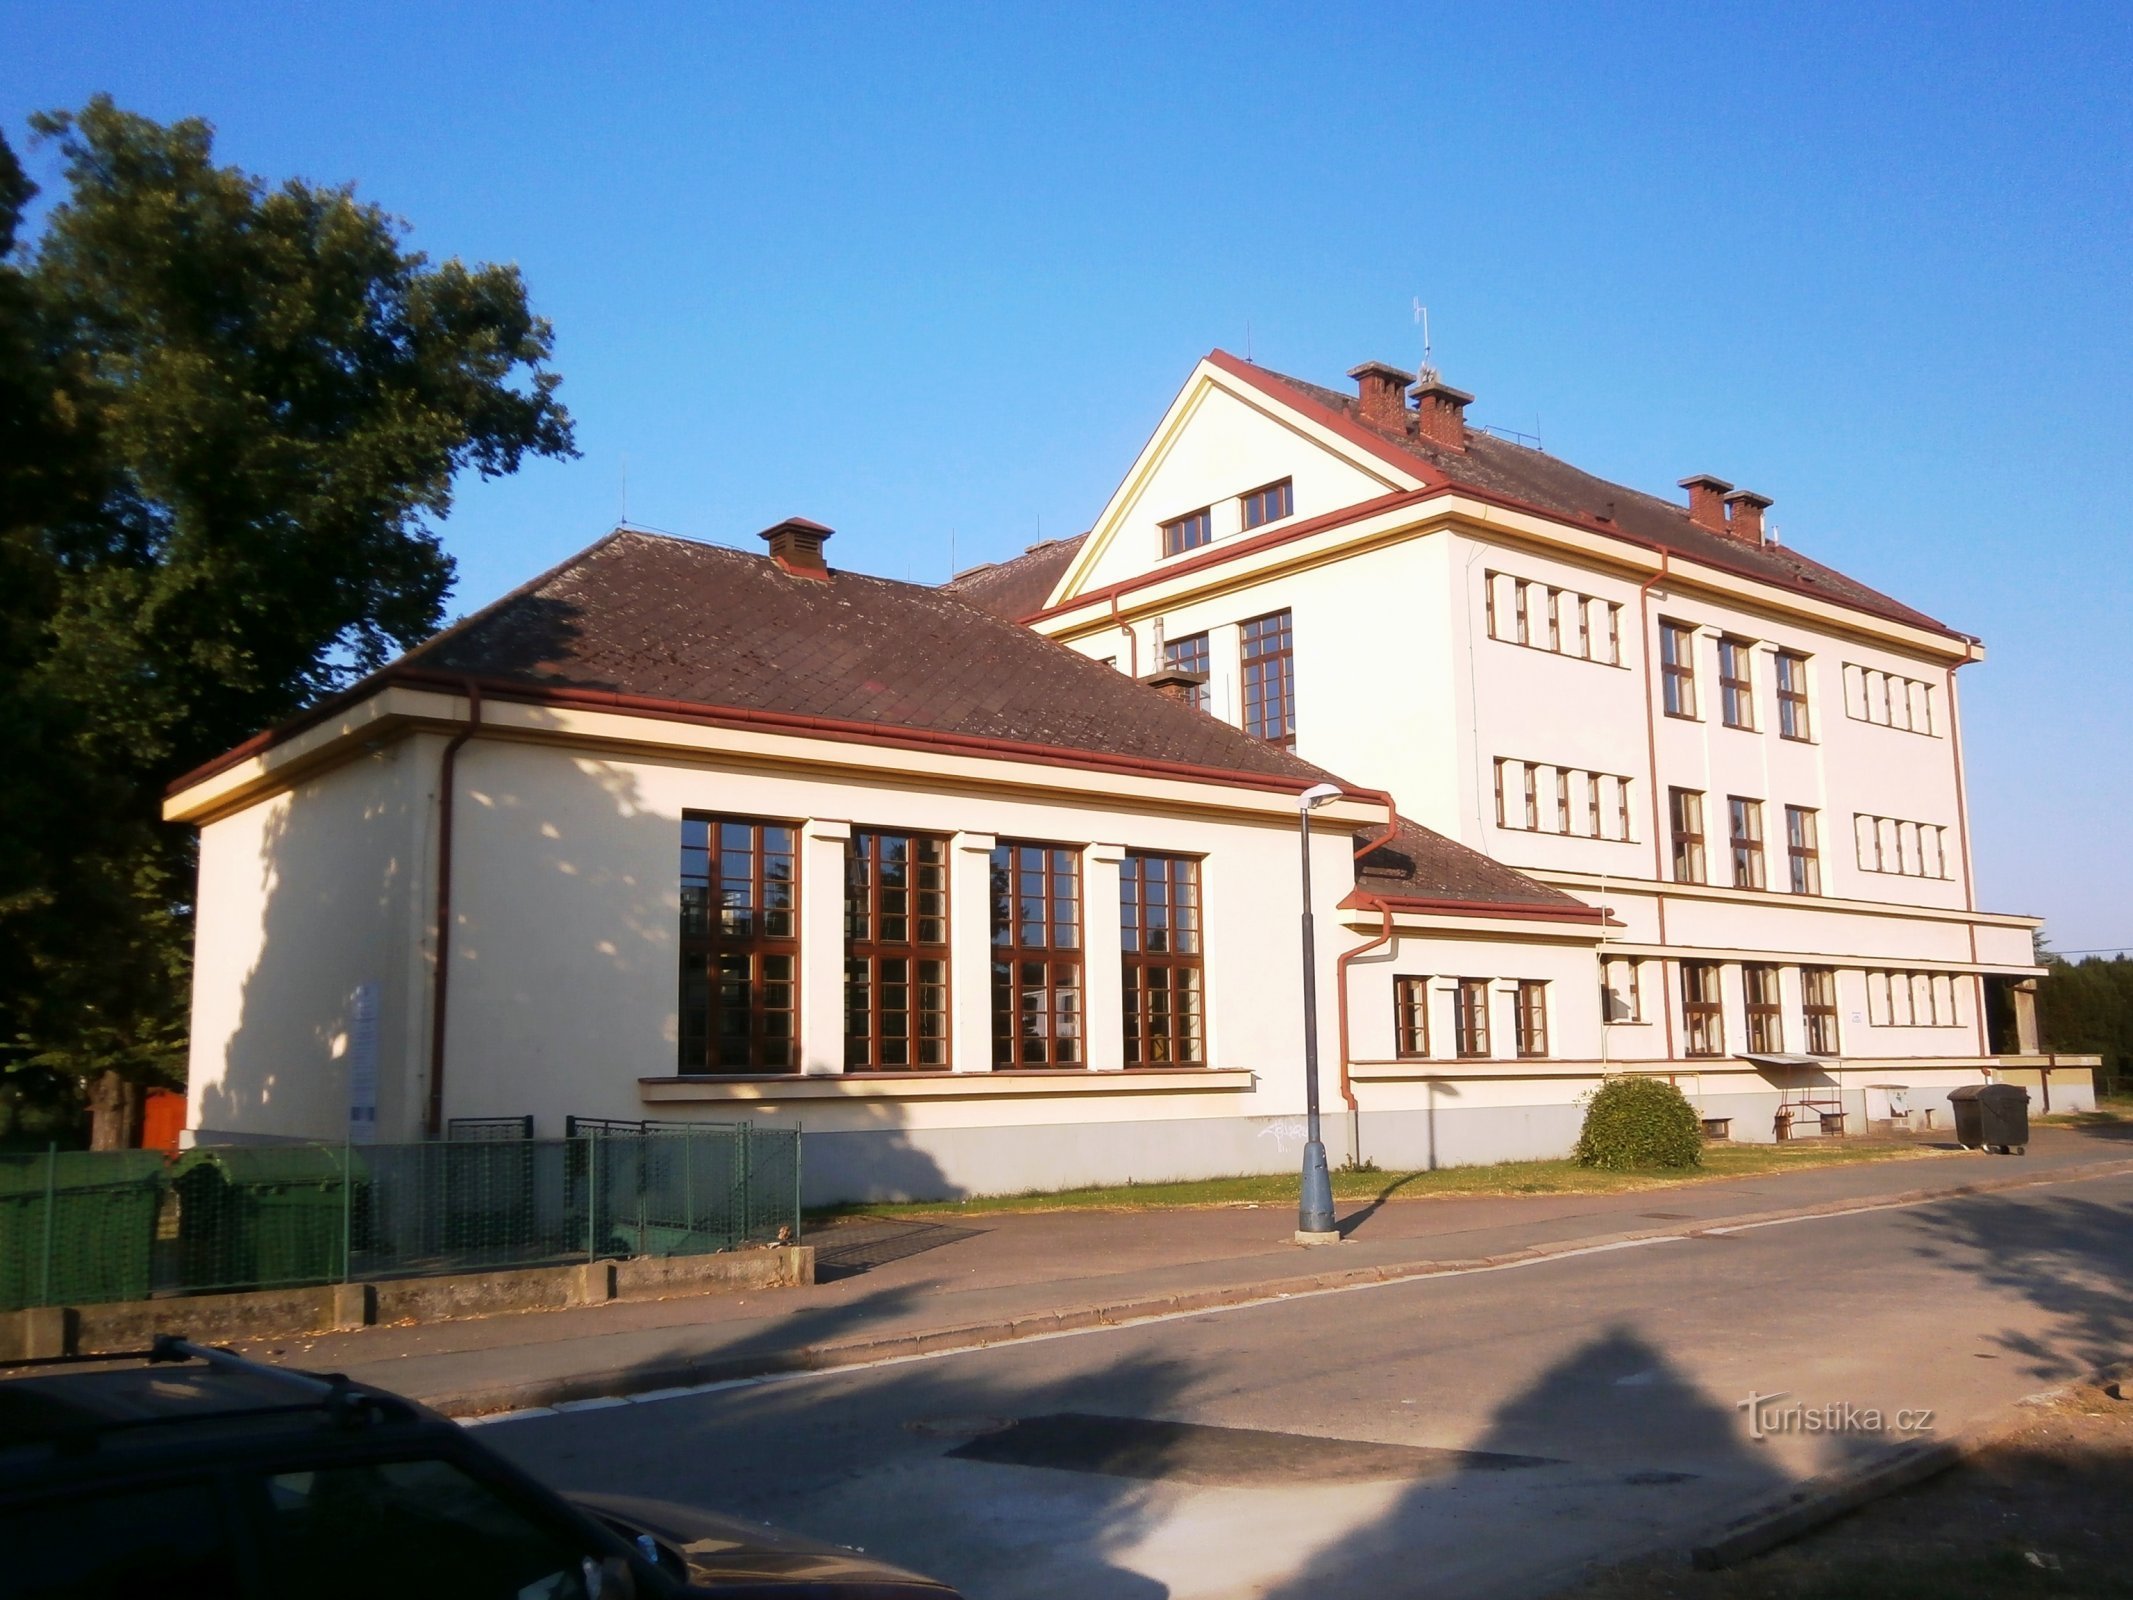 Masaryk Primary School i Plotiště nad Labem (Hradec Králové, 28.7.2013-XNUMX-XNUMX)